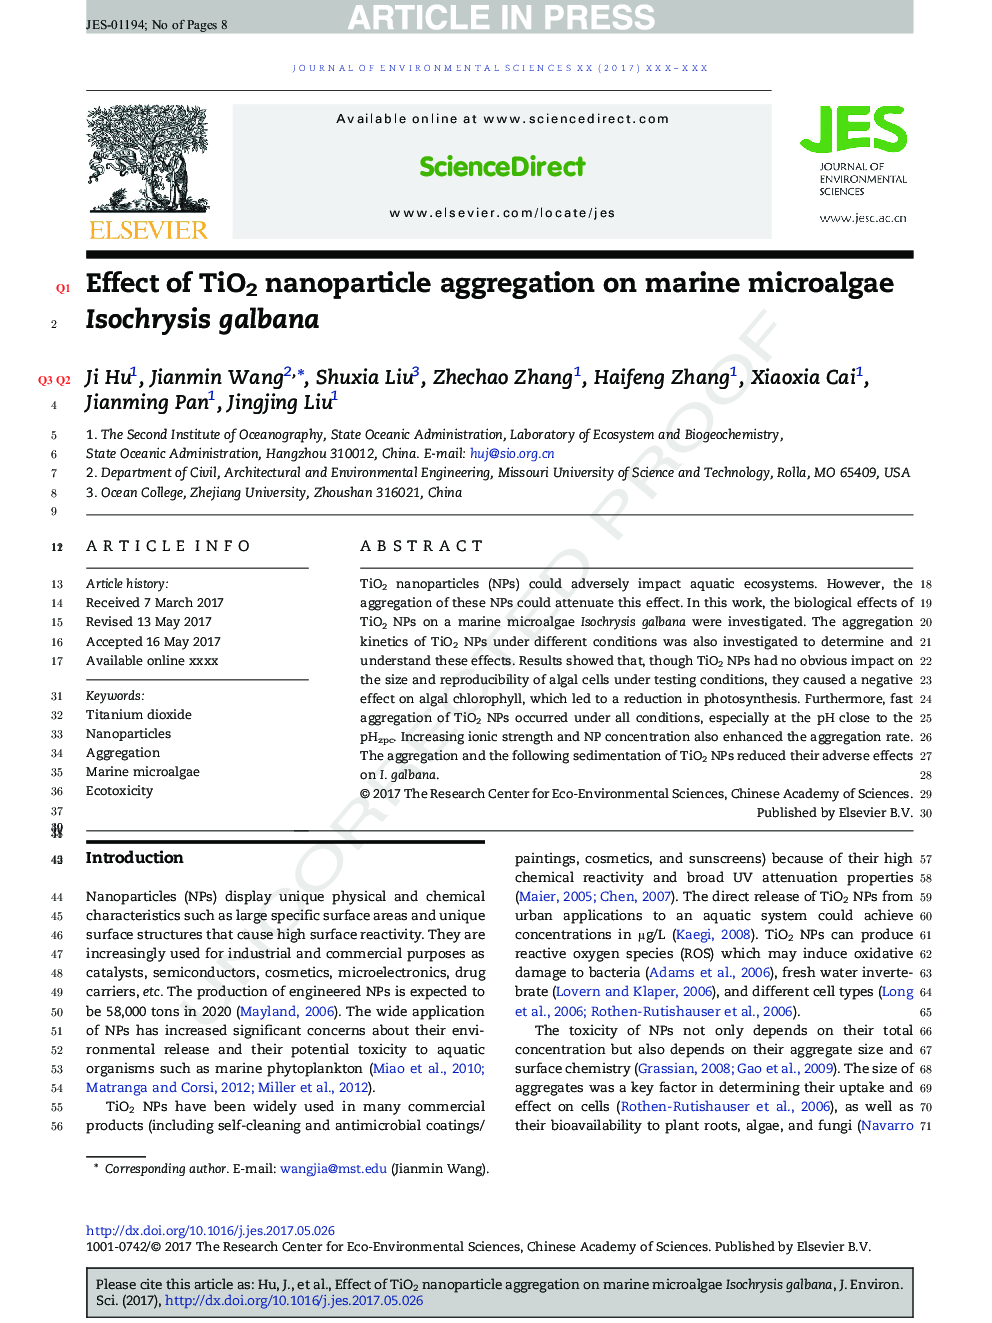 Effect of TiO2 nanoparticle aggregation on marine microalgae Isochrysis galbana